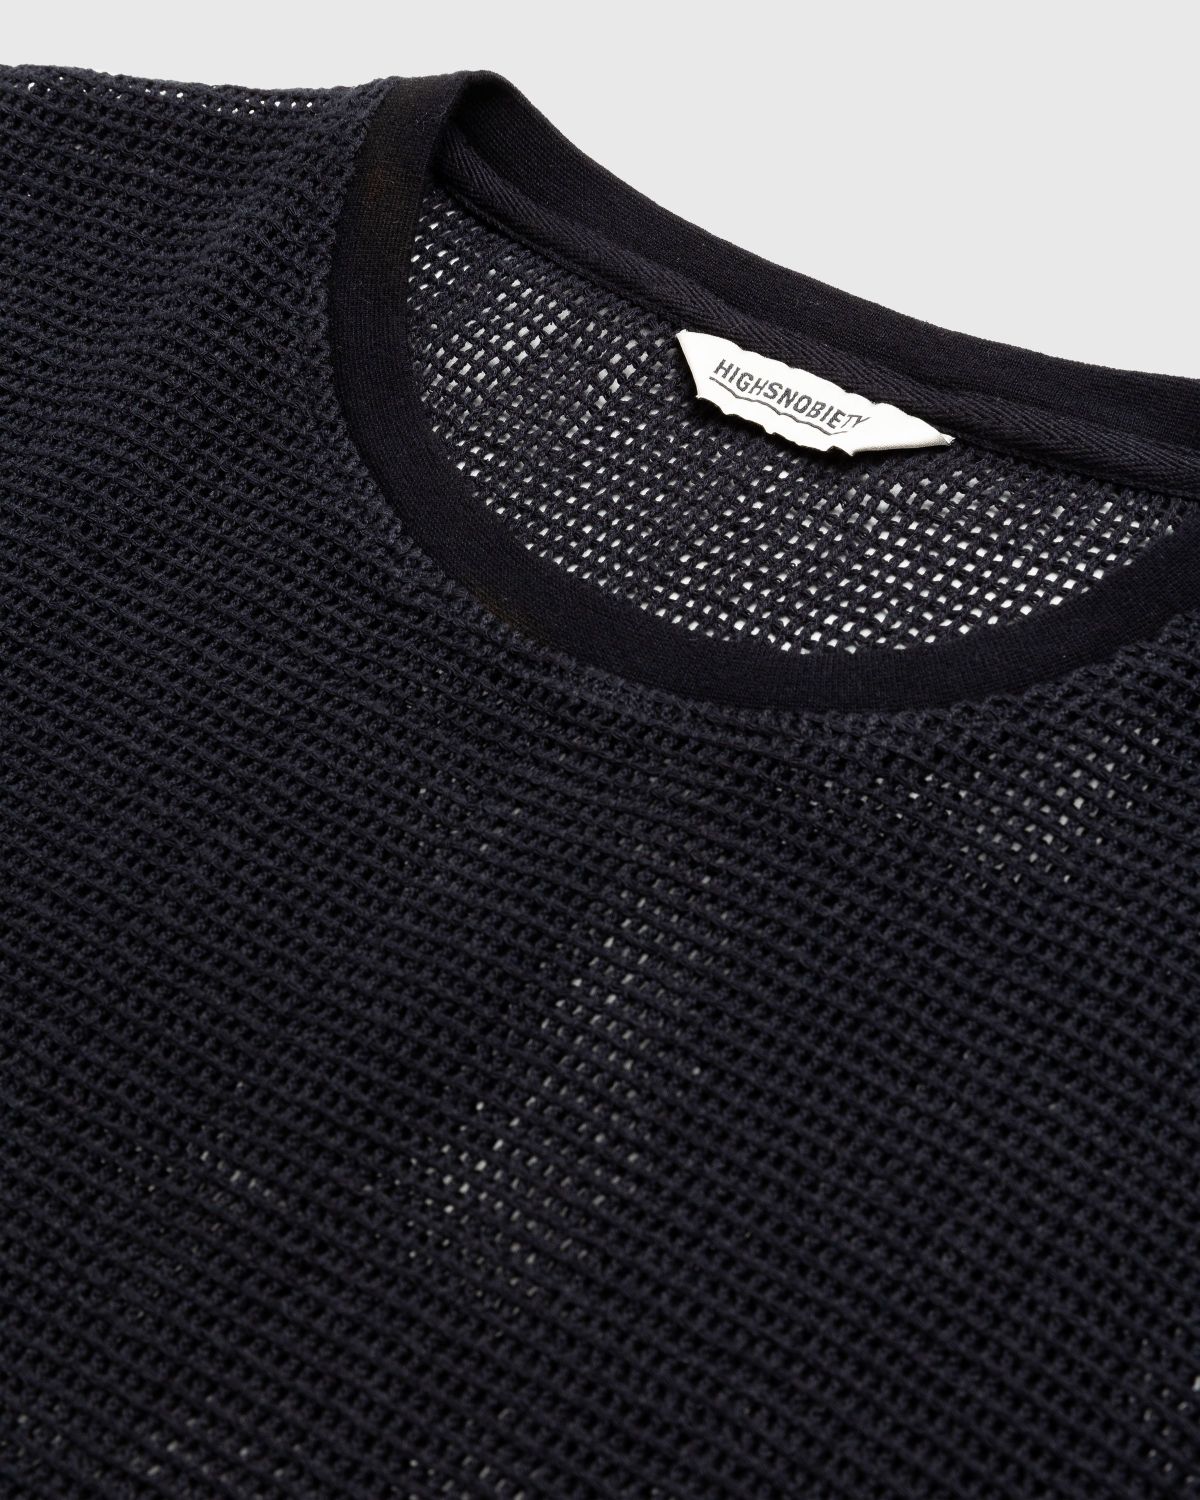 Highsnobiety – Cotton Mesh Knit T-Shirt Black - T-shirts - Black - Image 6